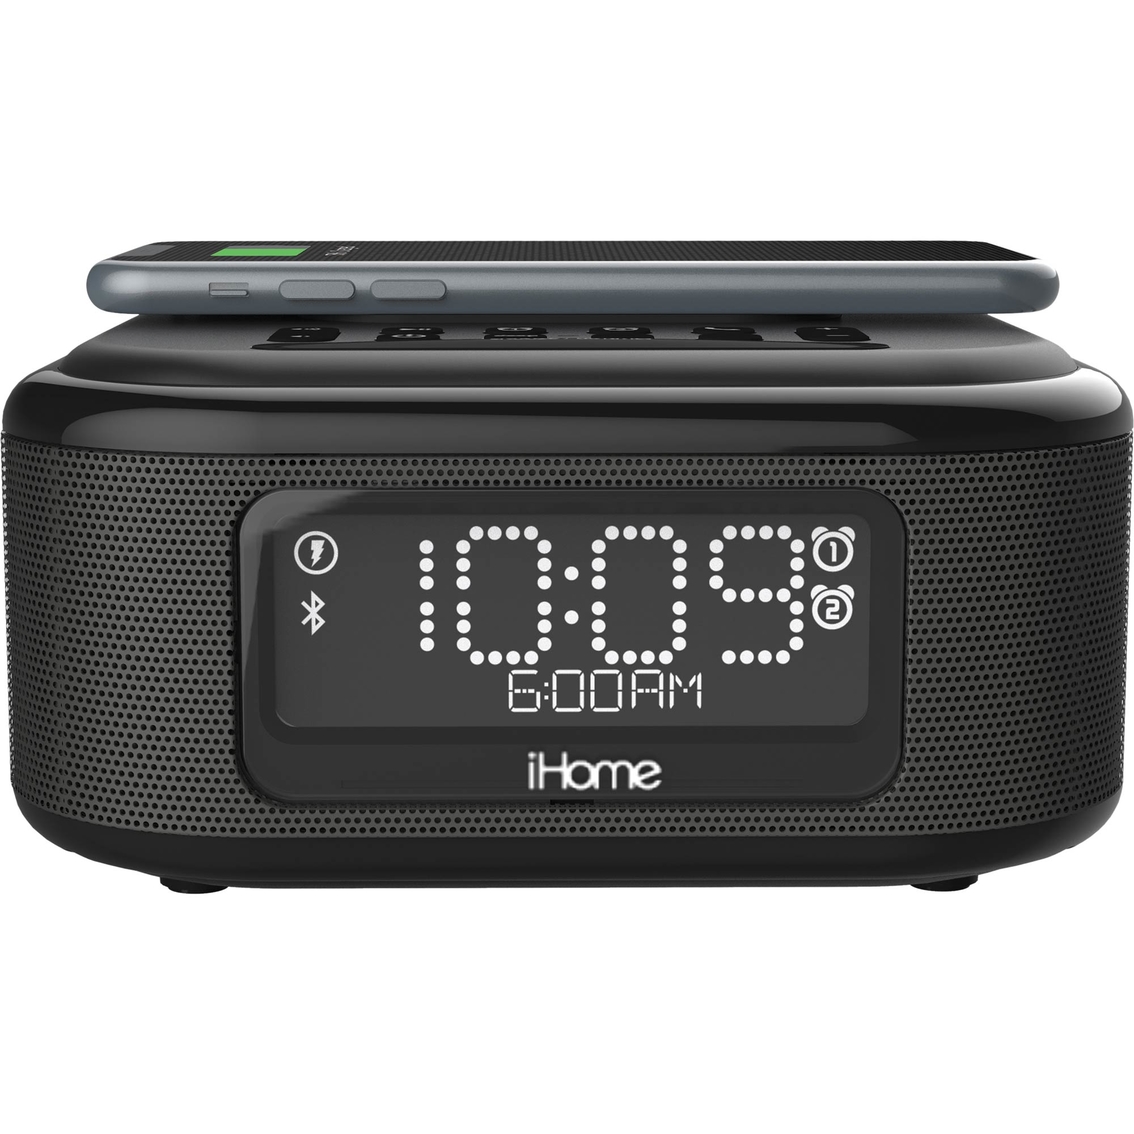 Ihome Bluetooth Stereo Dual Alarm Clock With Speakerphone ...